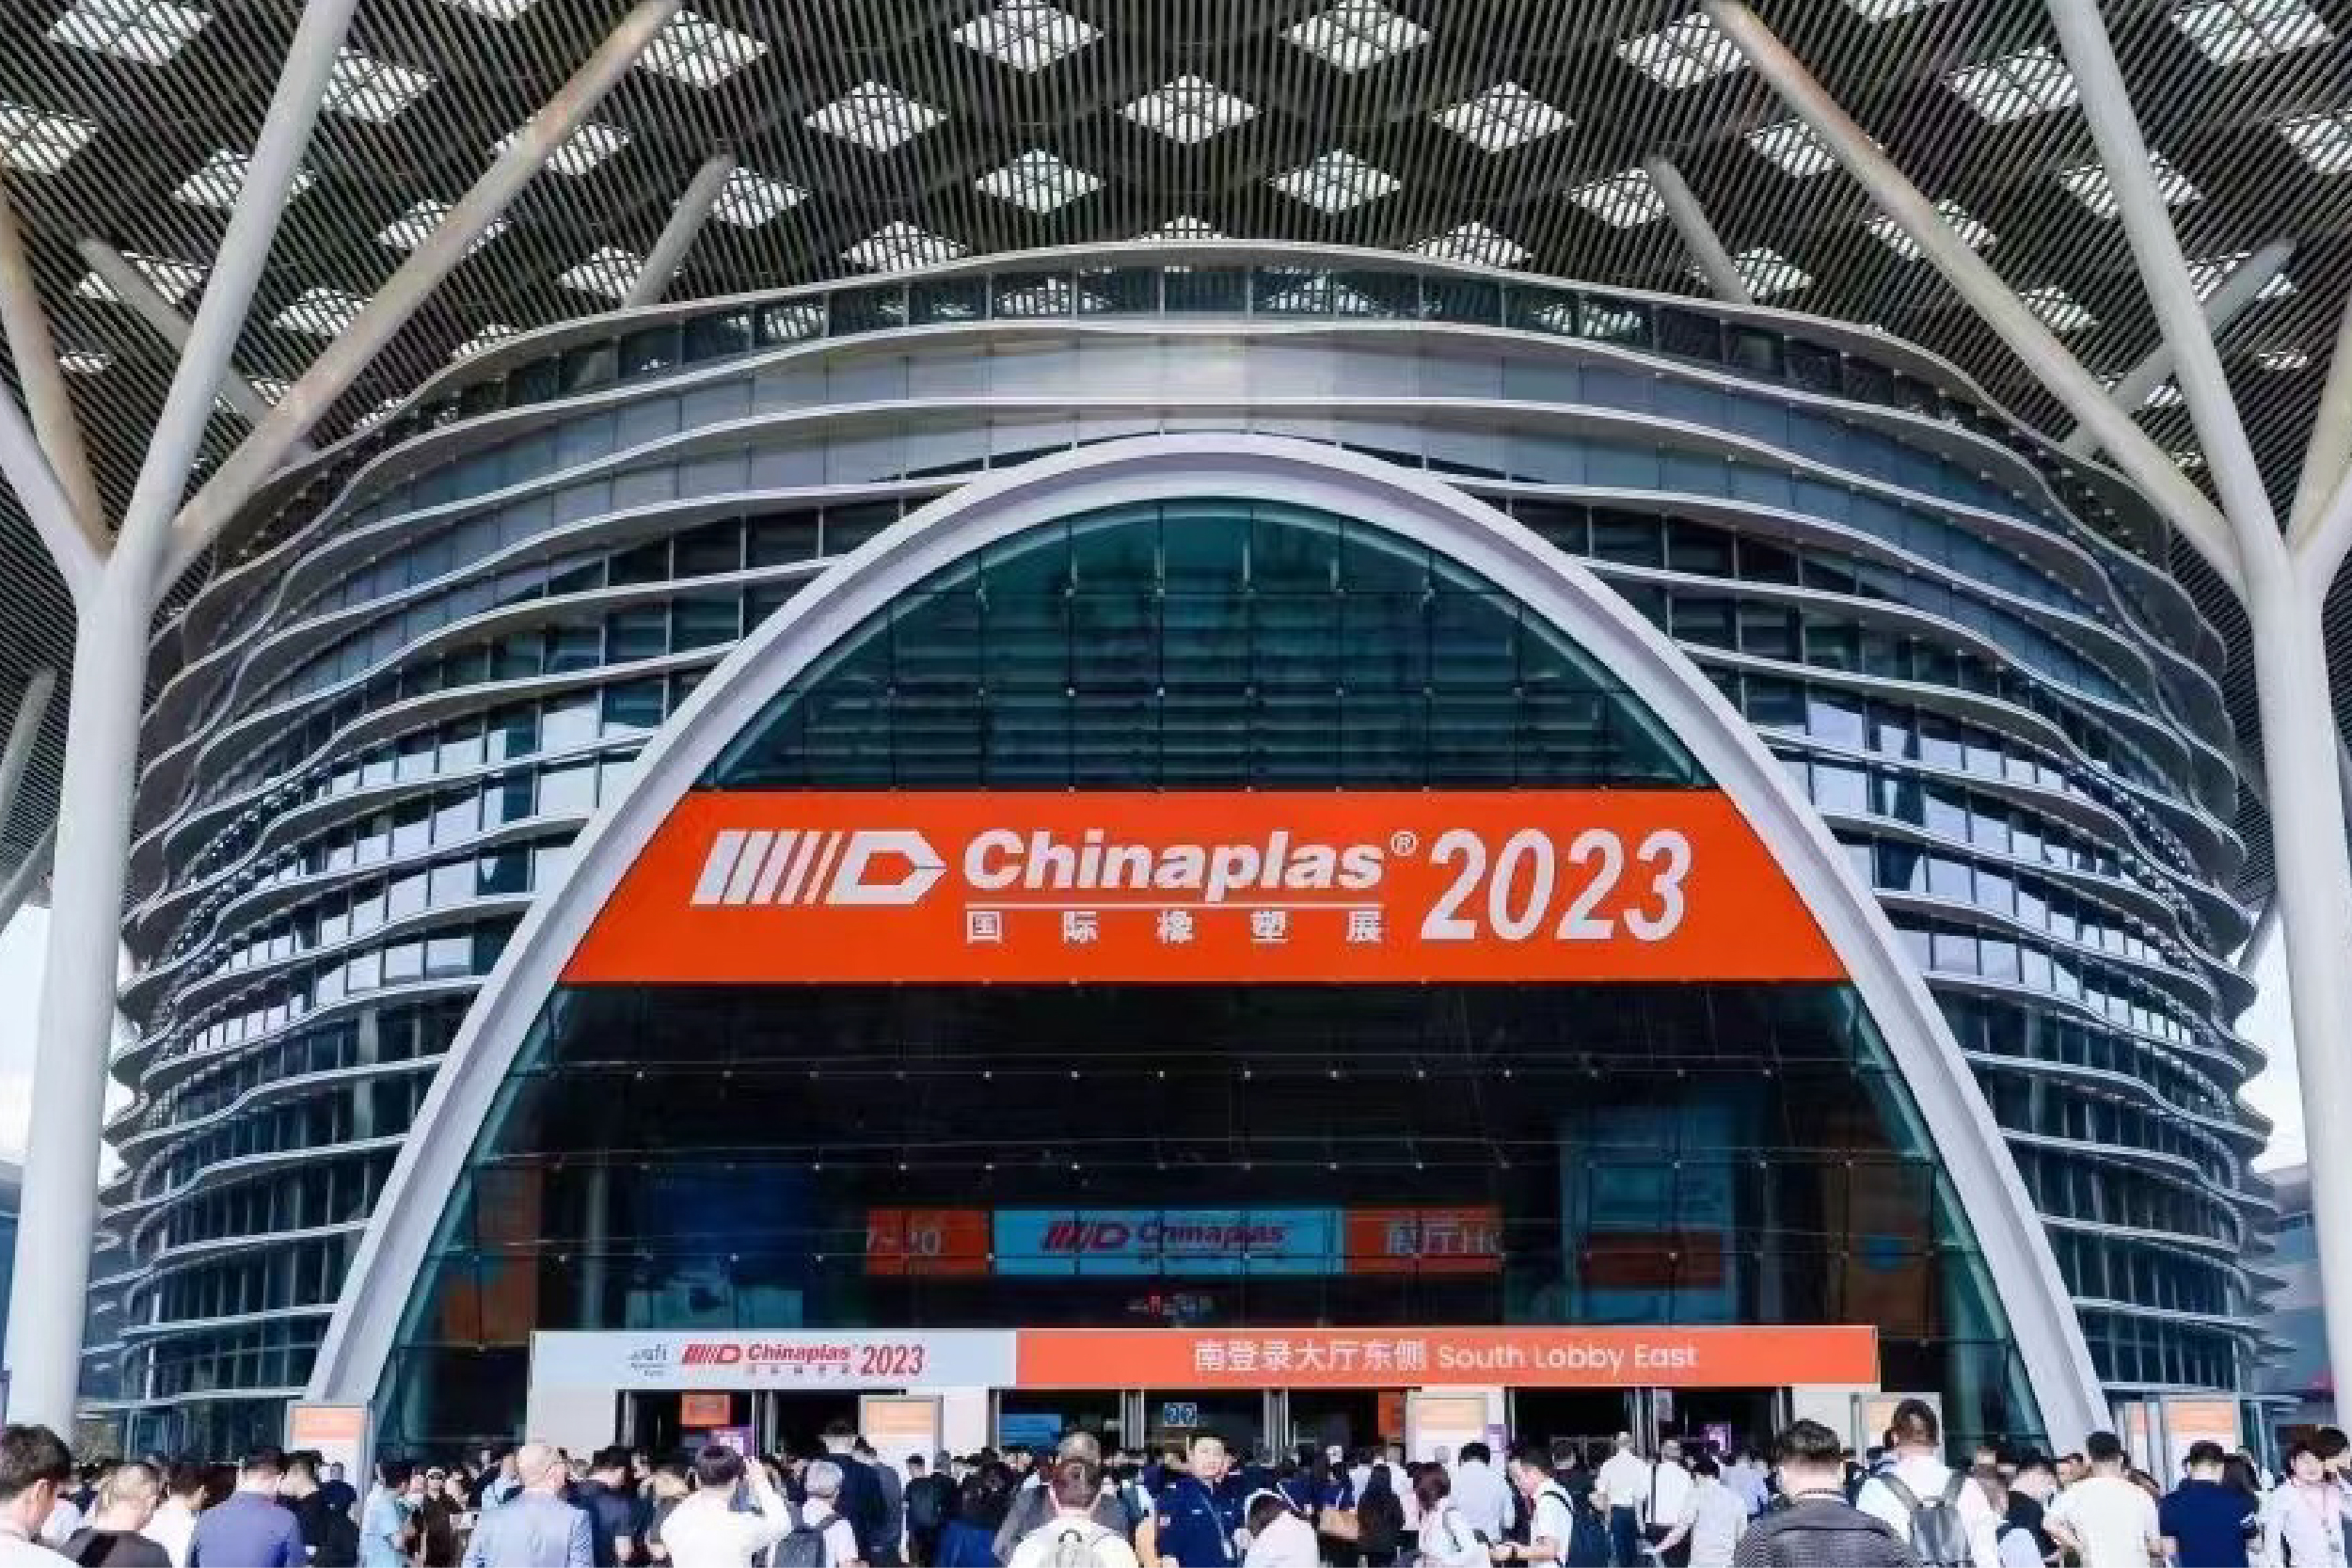 Chinaplas 2023 International Rubber & Plastics Exhibition ends successfully